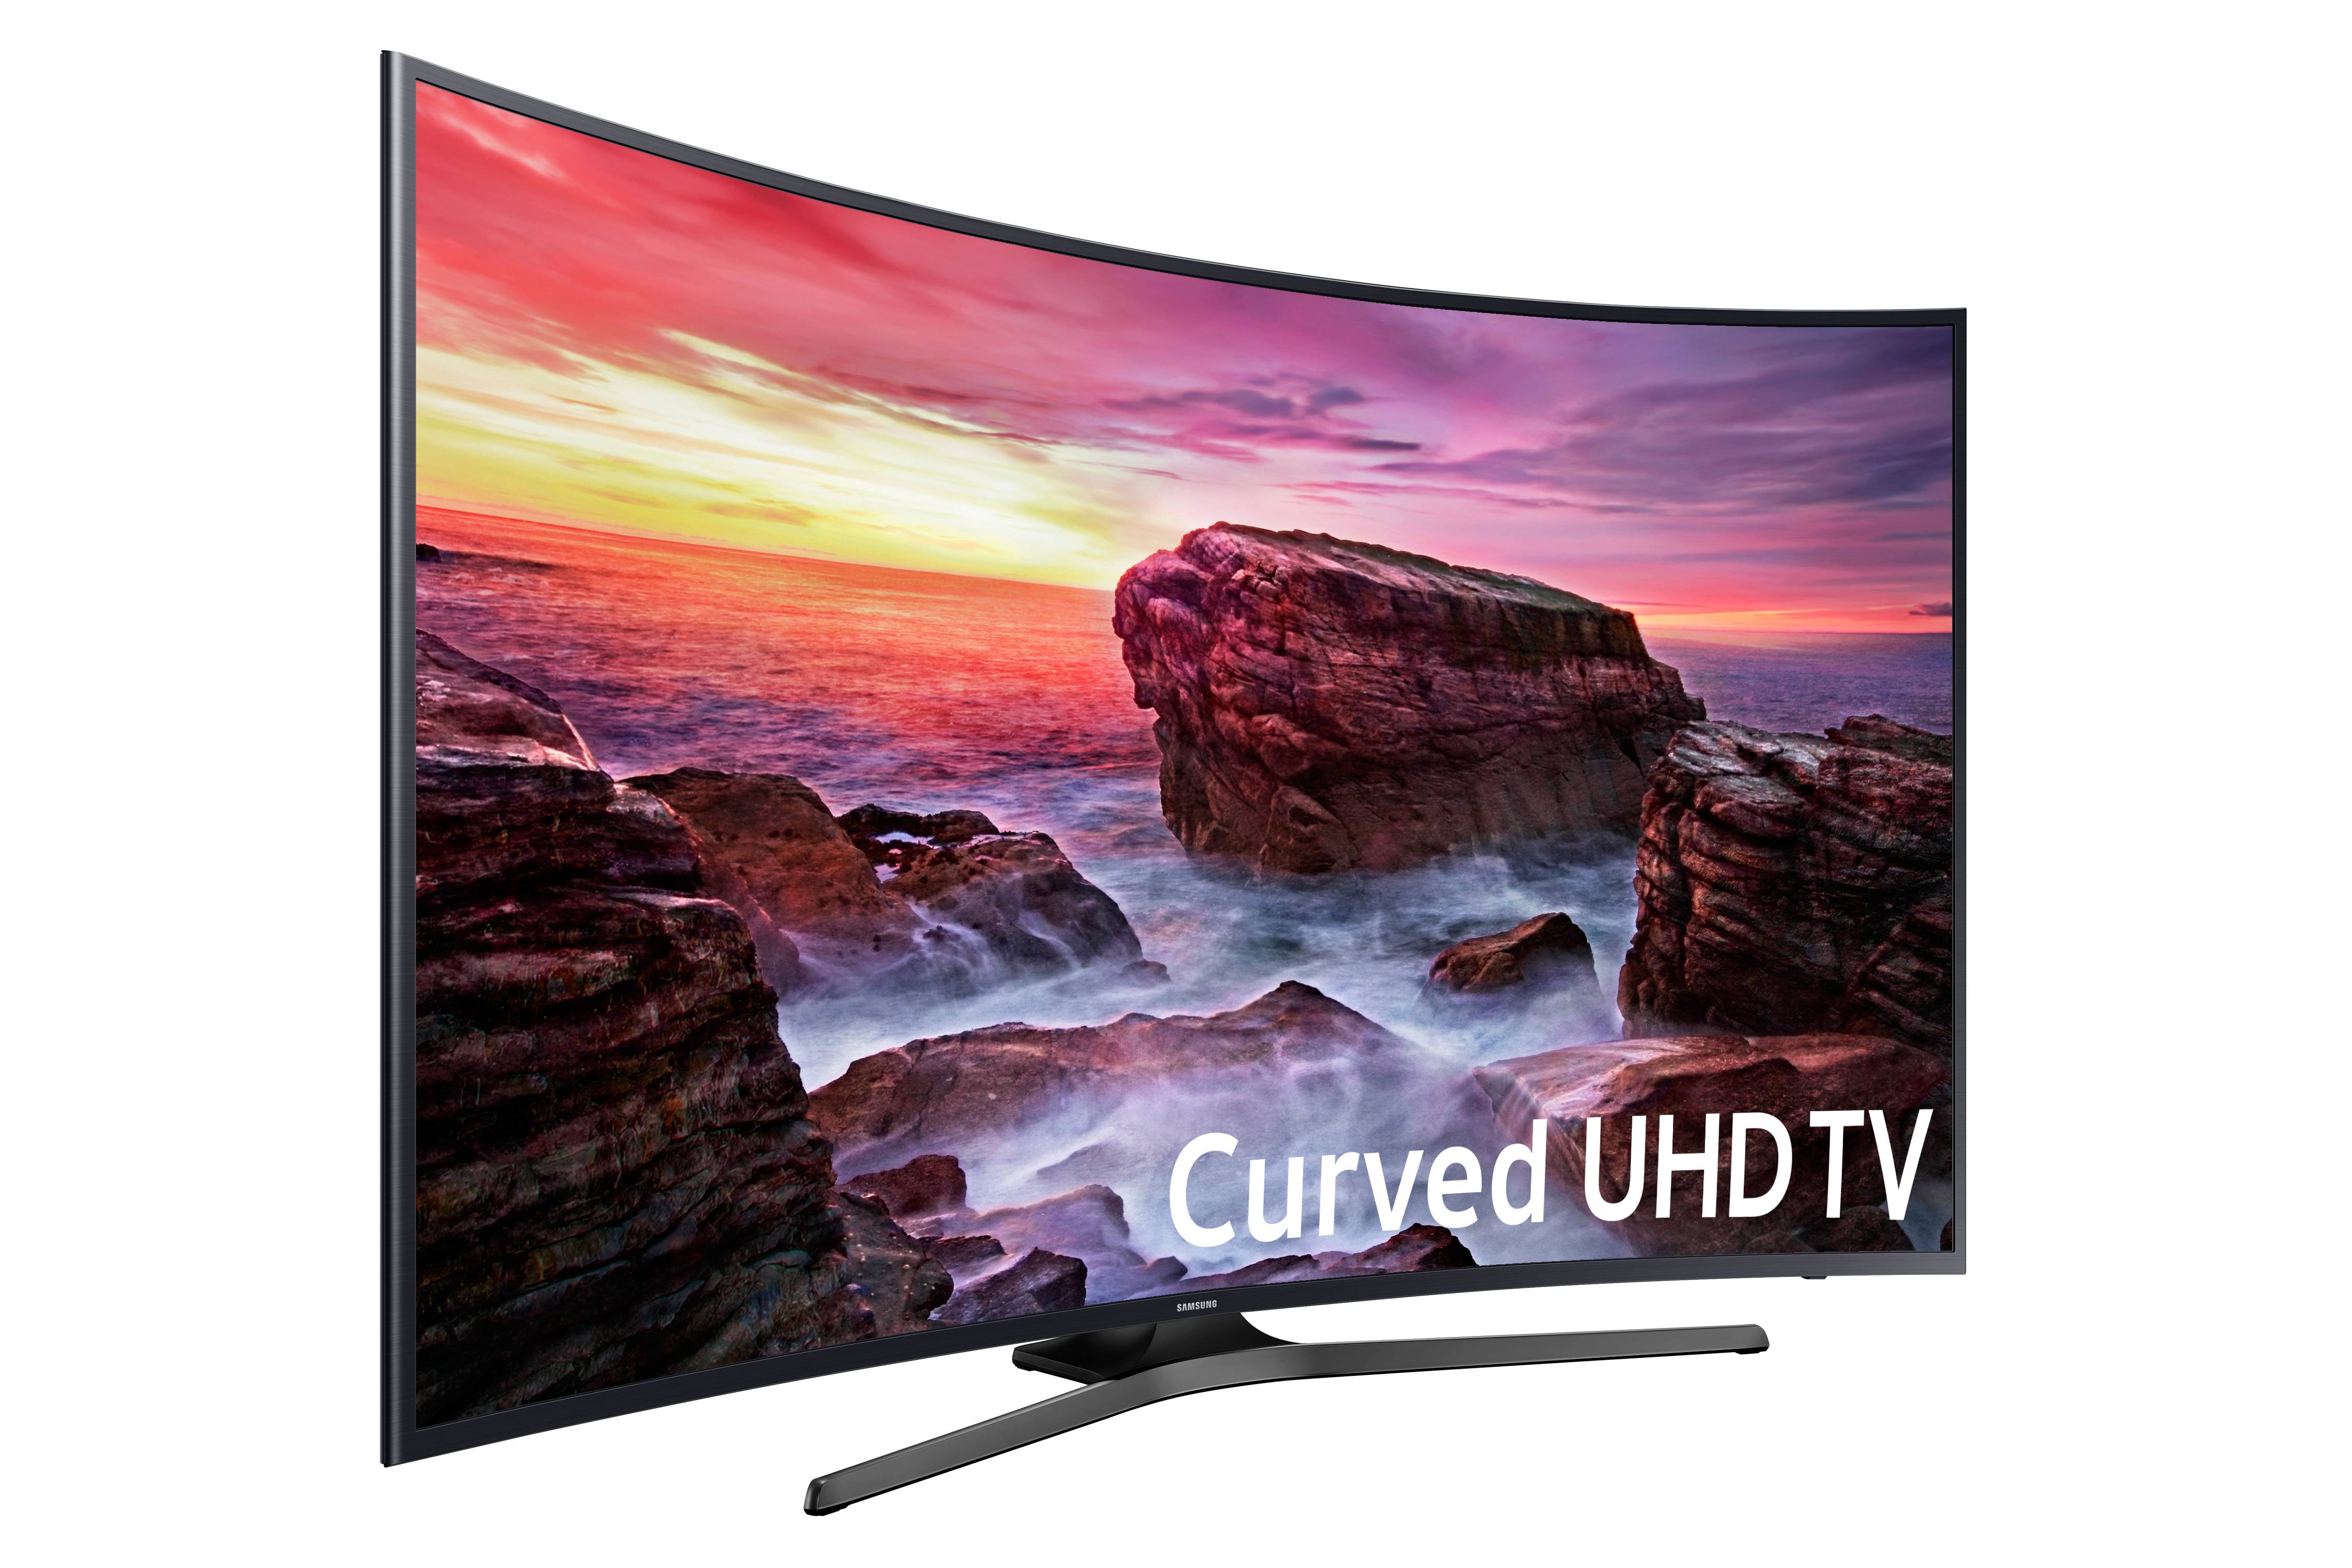 SAMSUNG 55" Class Curved 4K (2160P) Ultra HD Smart LED TV (UN55MU6490) - image 1 of 11